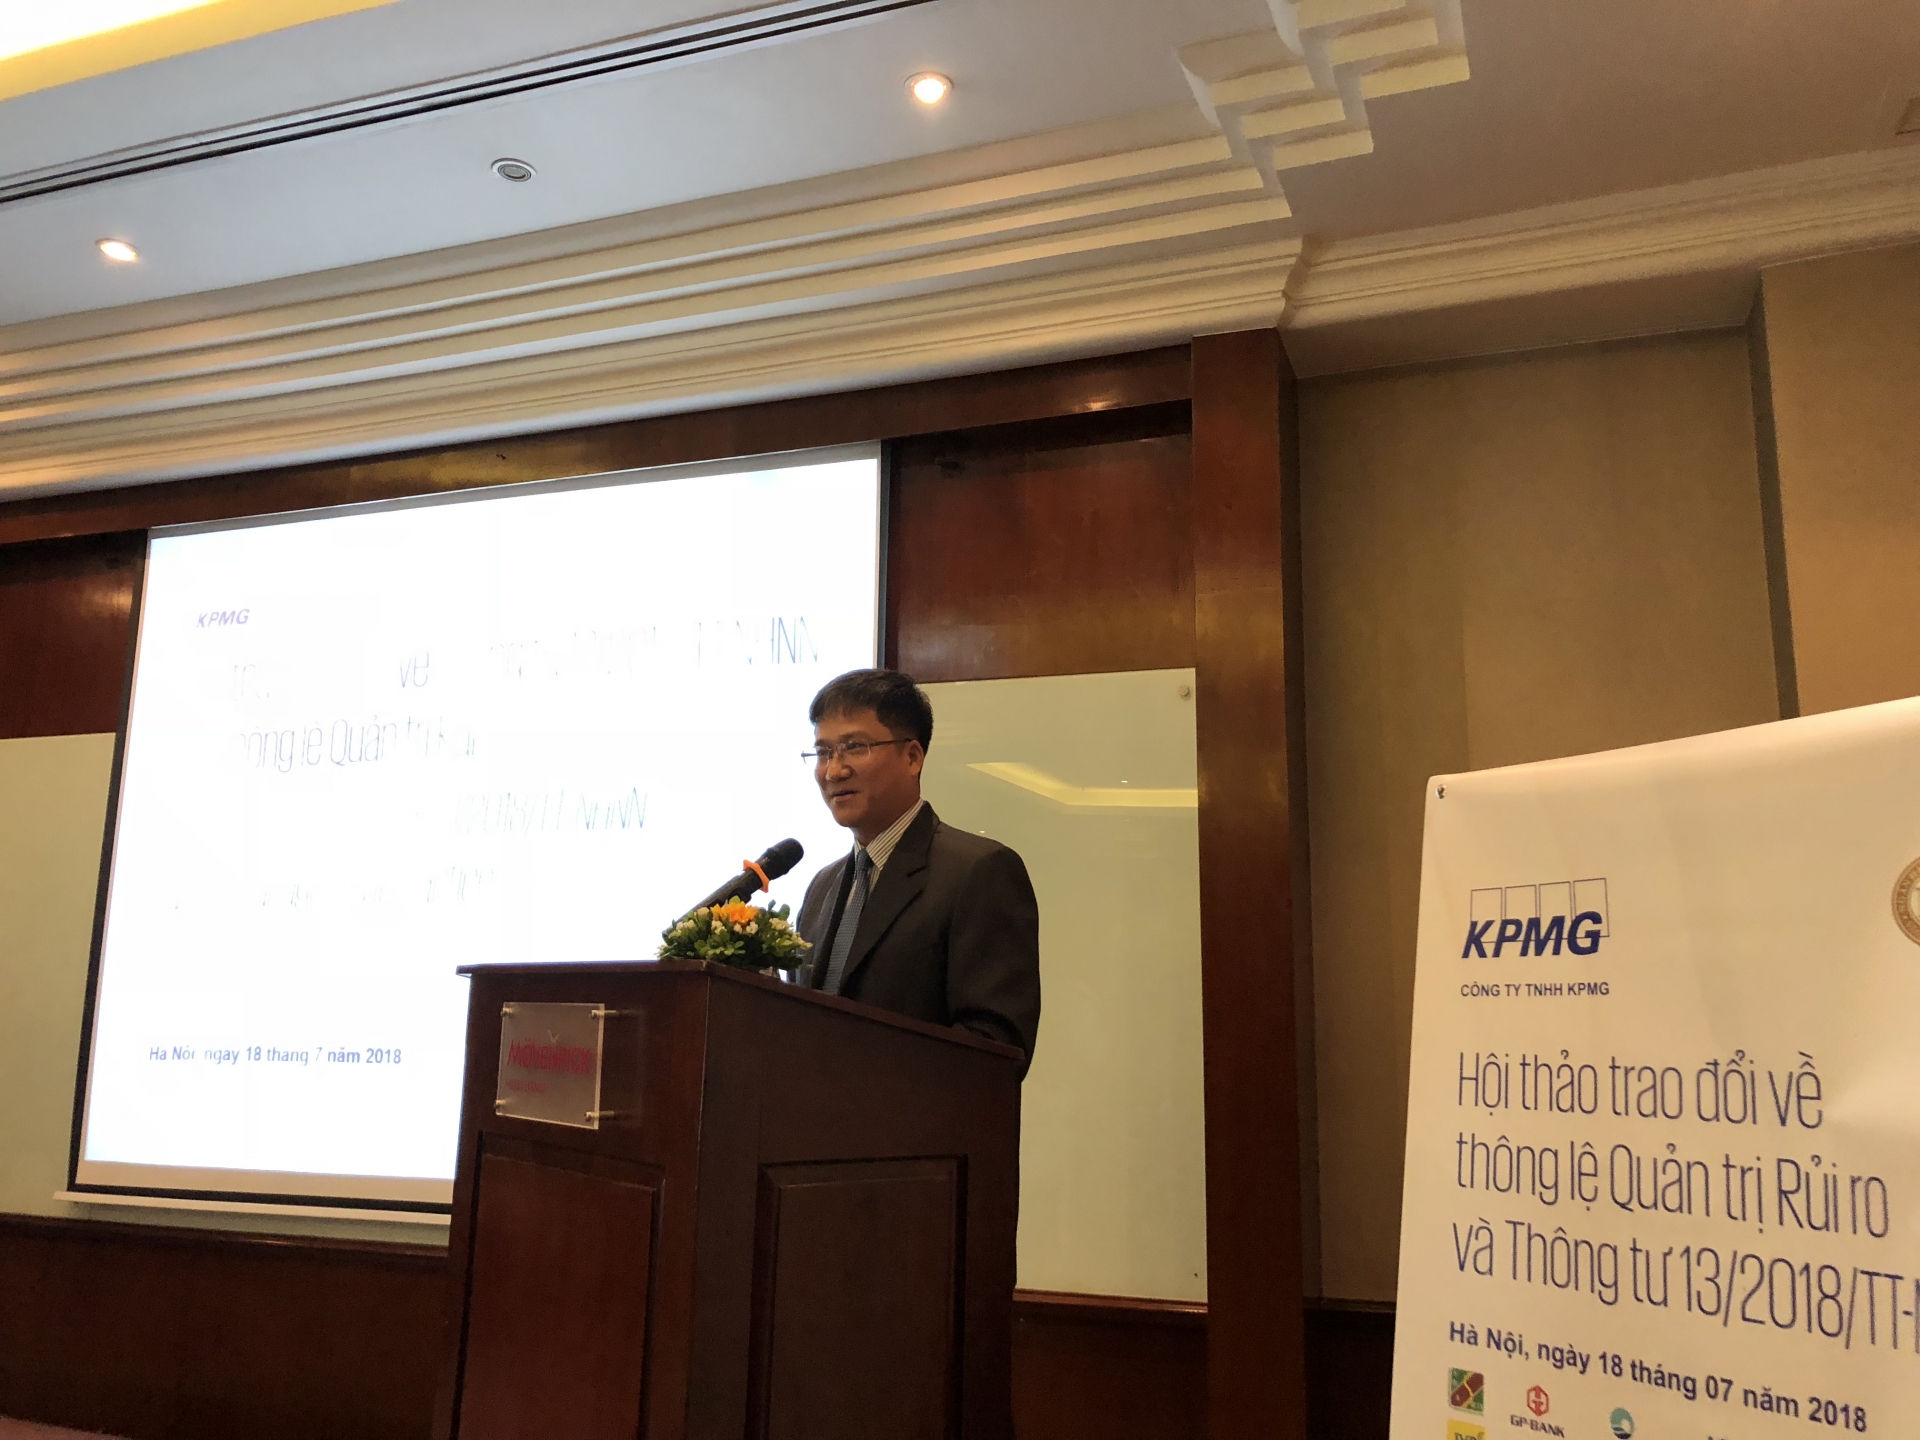 kpmg hosts seminars to discuss circular 13 by state bank of vietnam